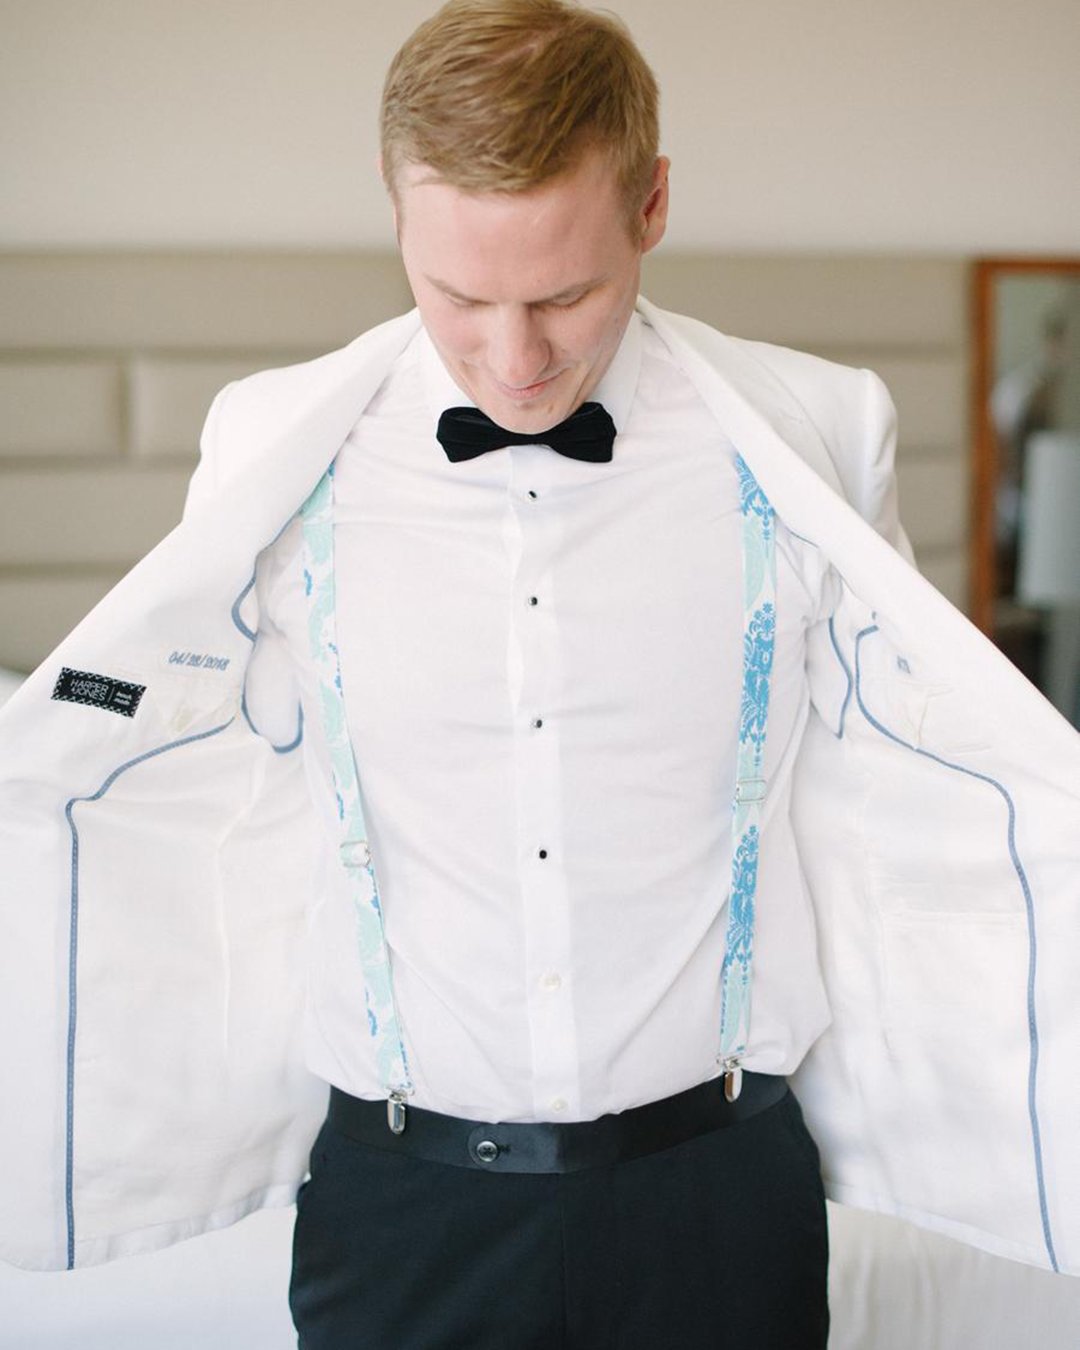 groomsmen attire with suspenders turguoise white jacket katielopezphotograph .